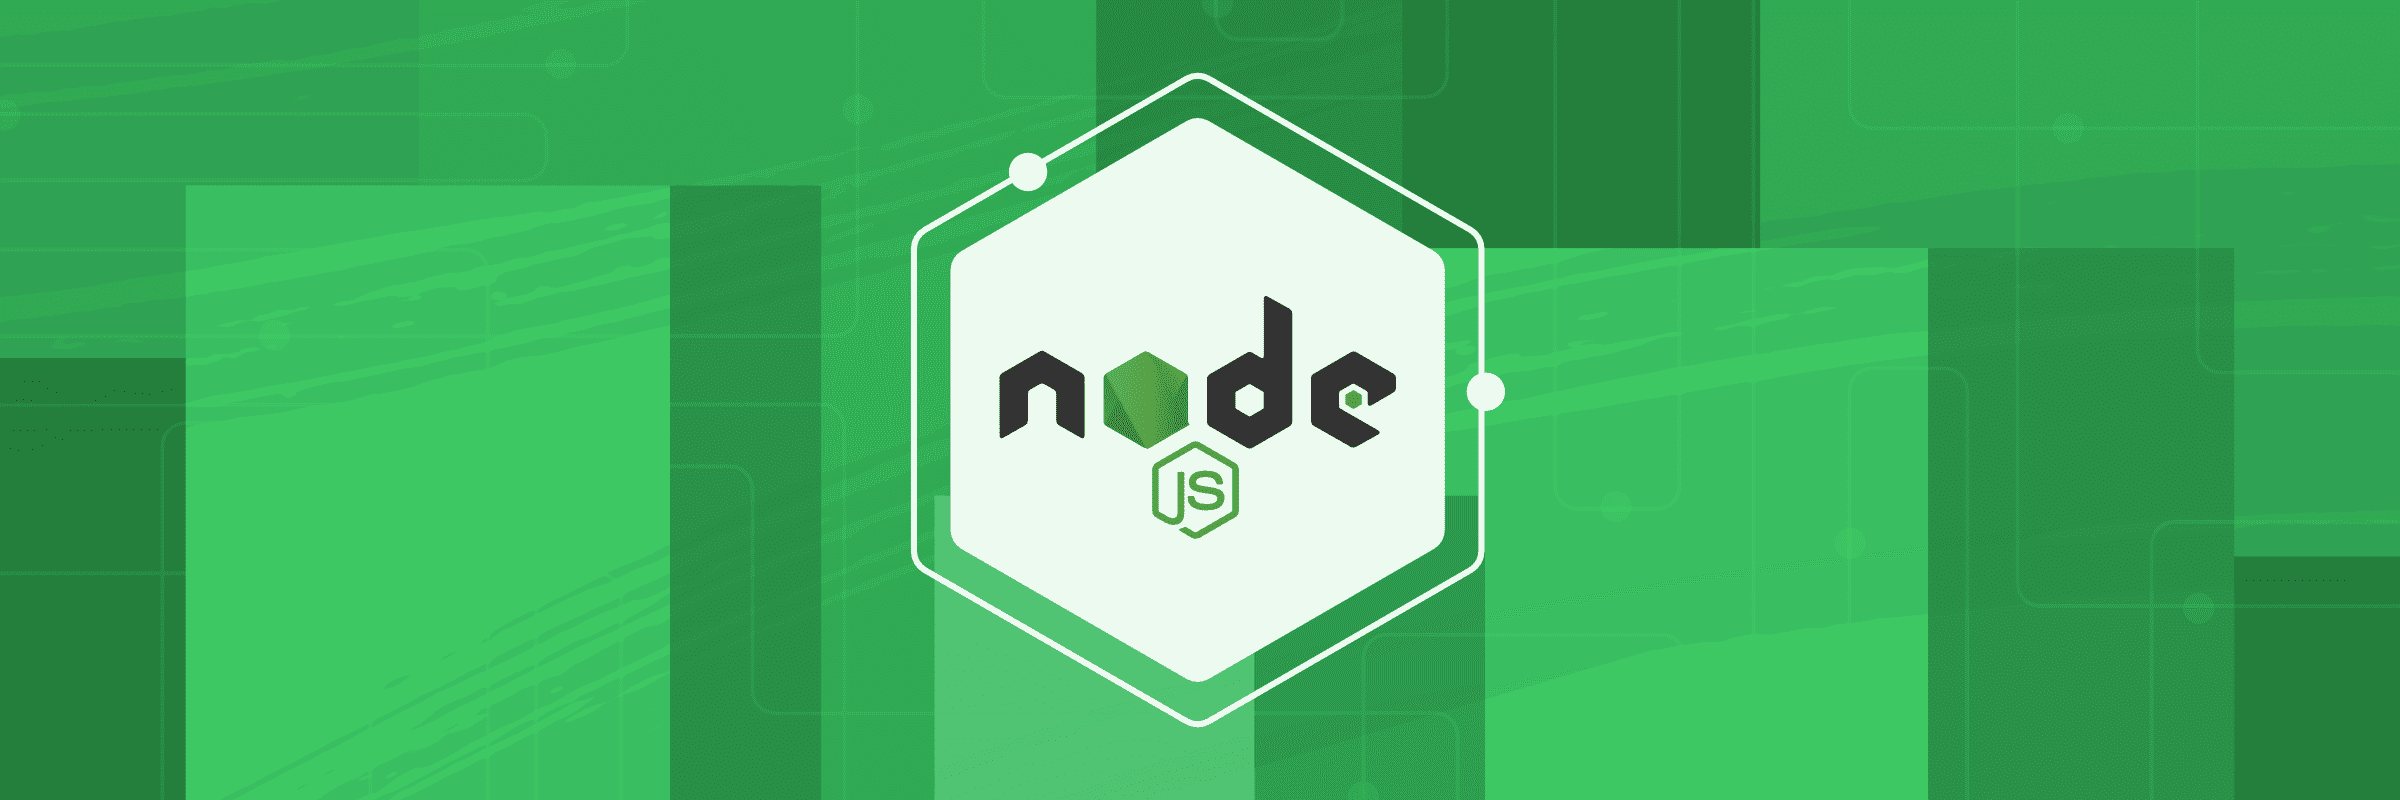 node app